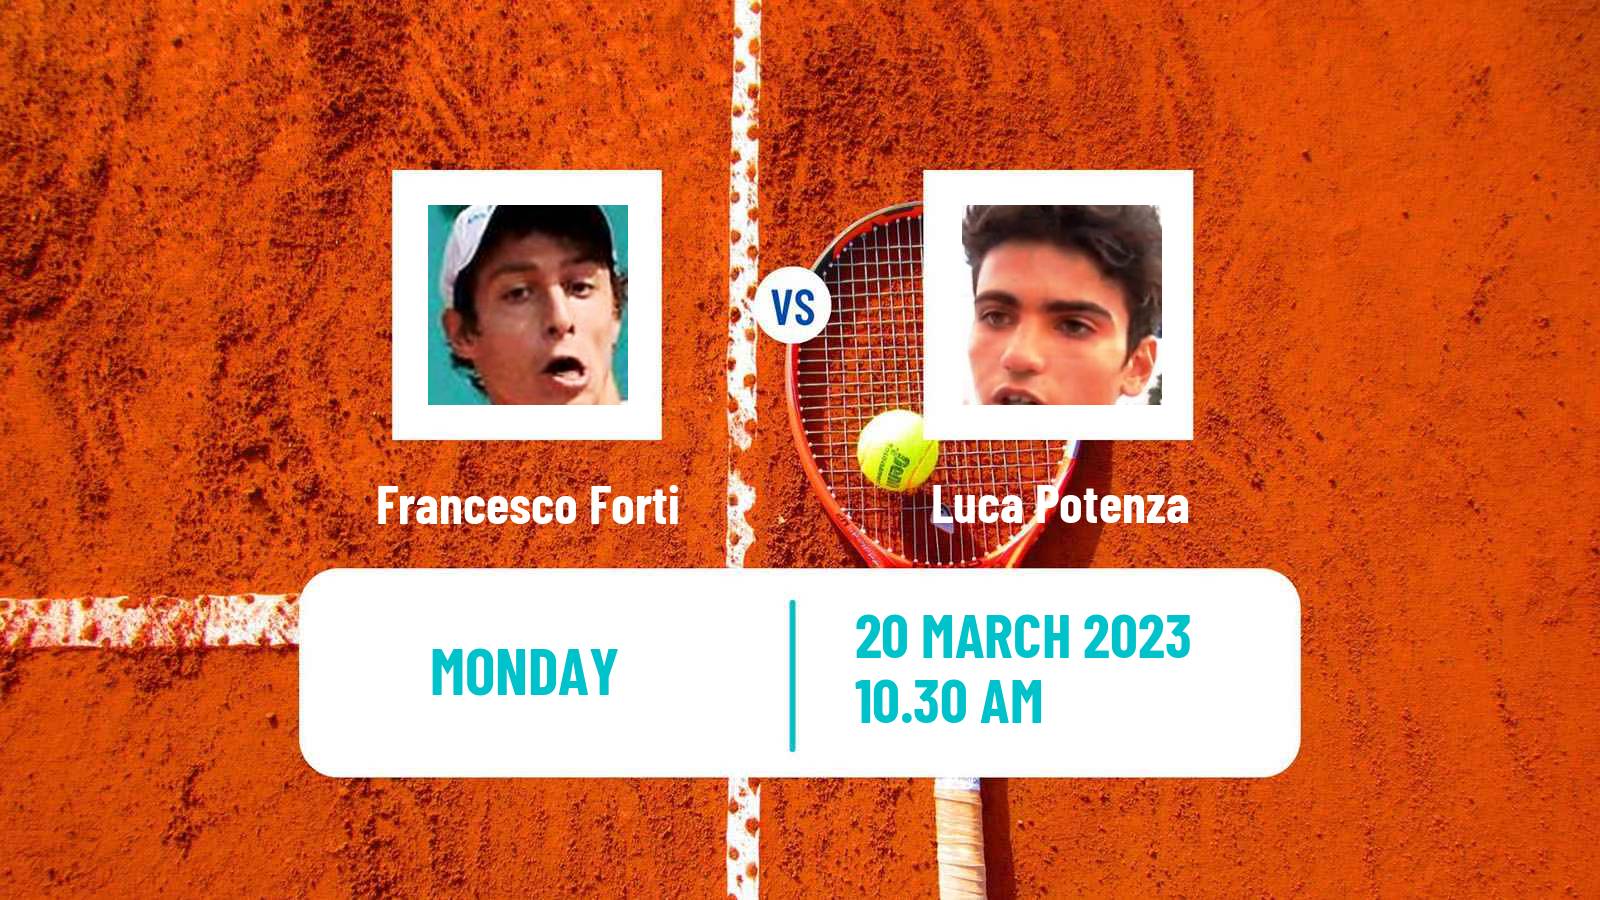 Tennis ATP Challenger Francesco Forti - Luca Potenza